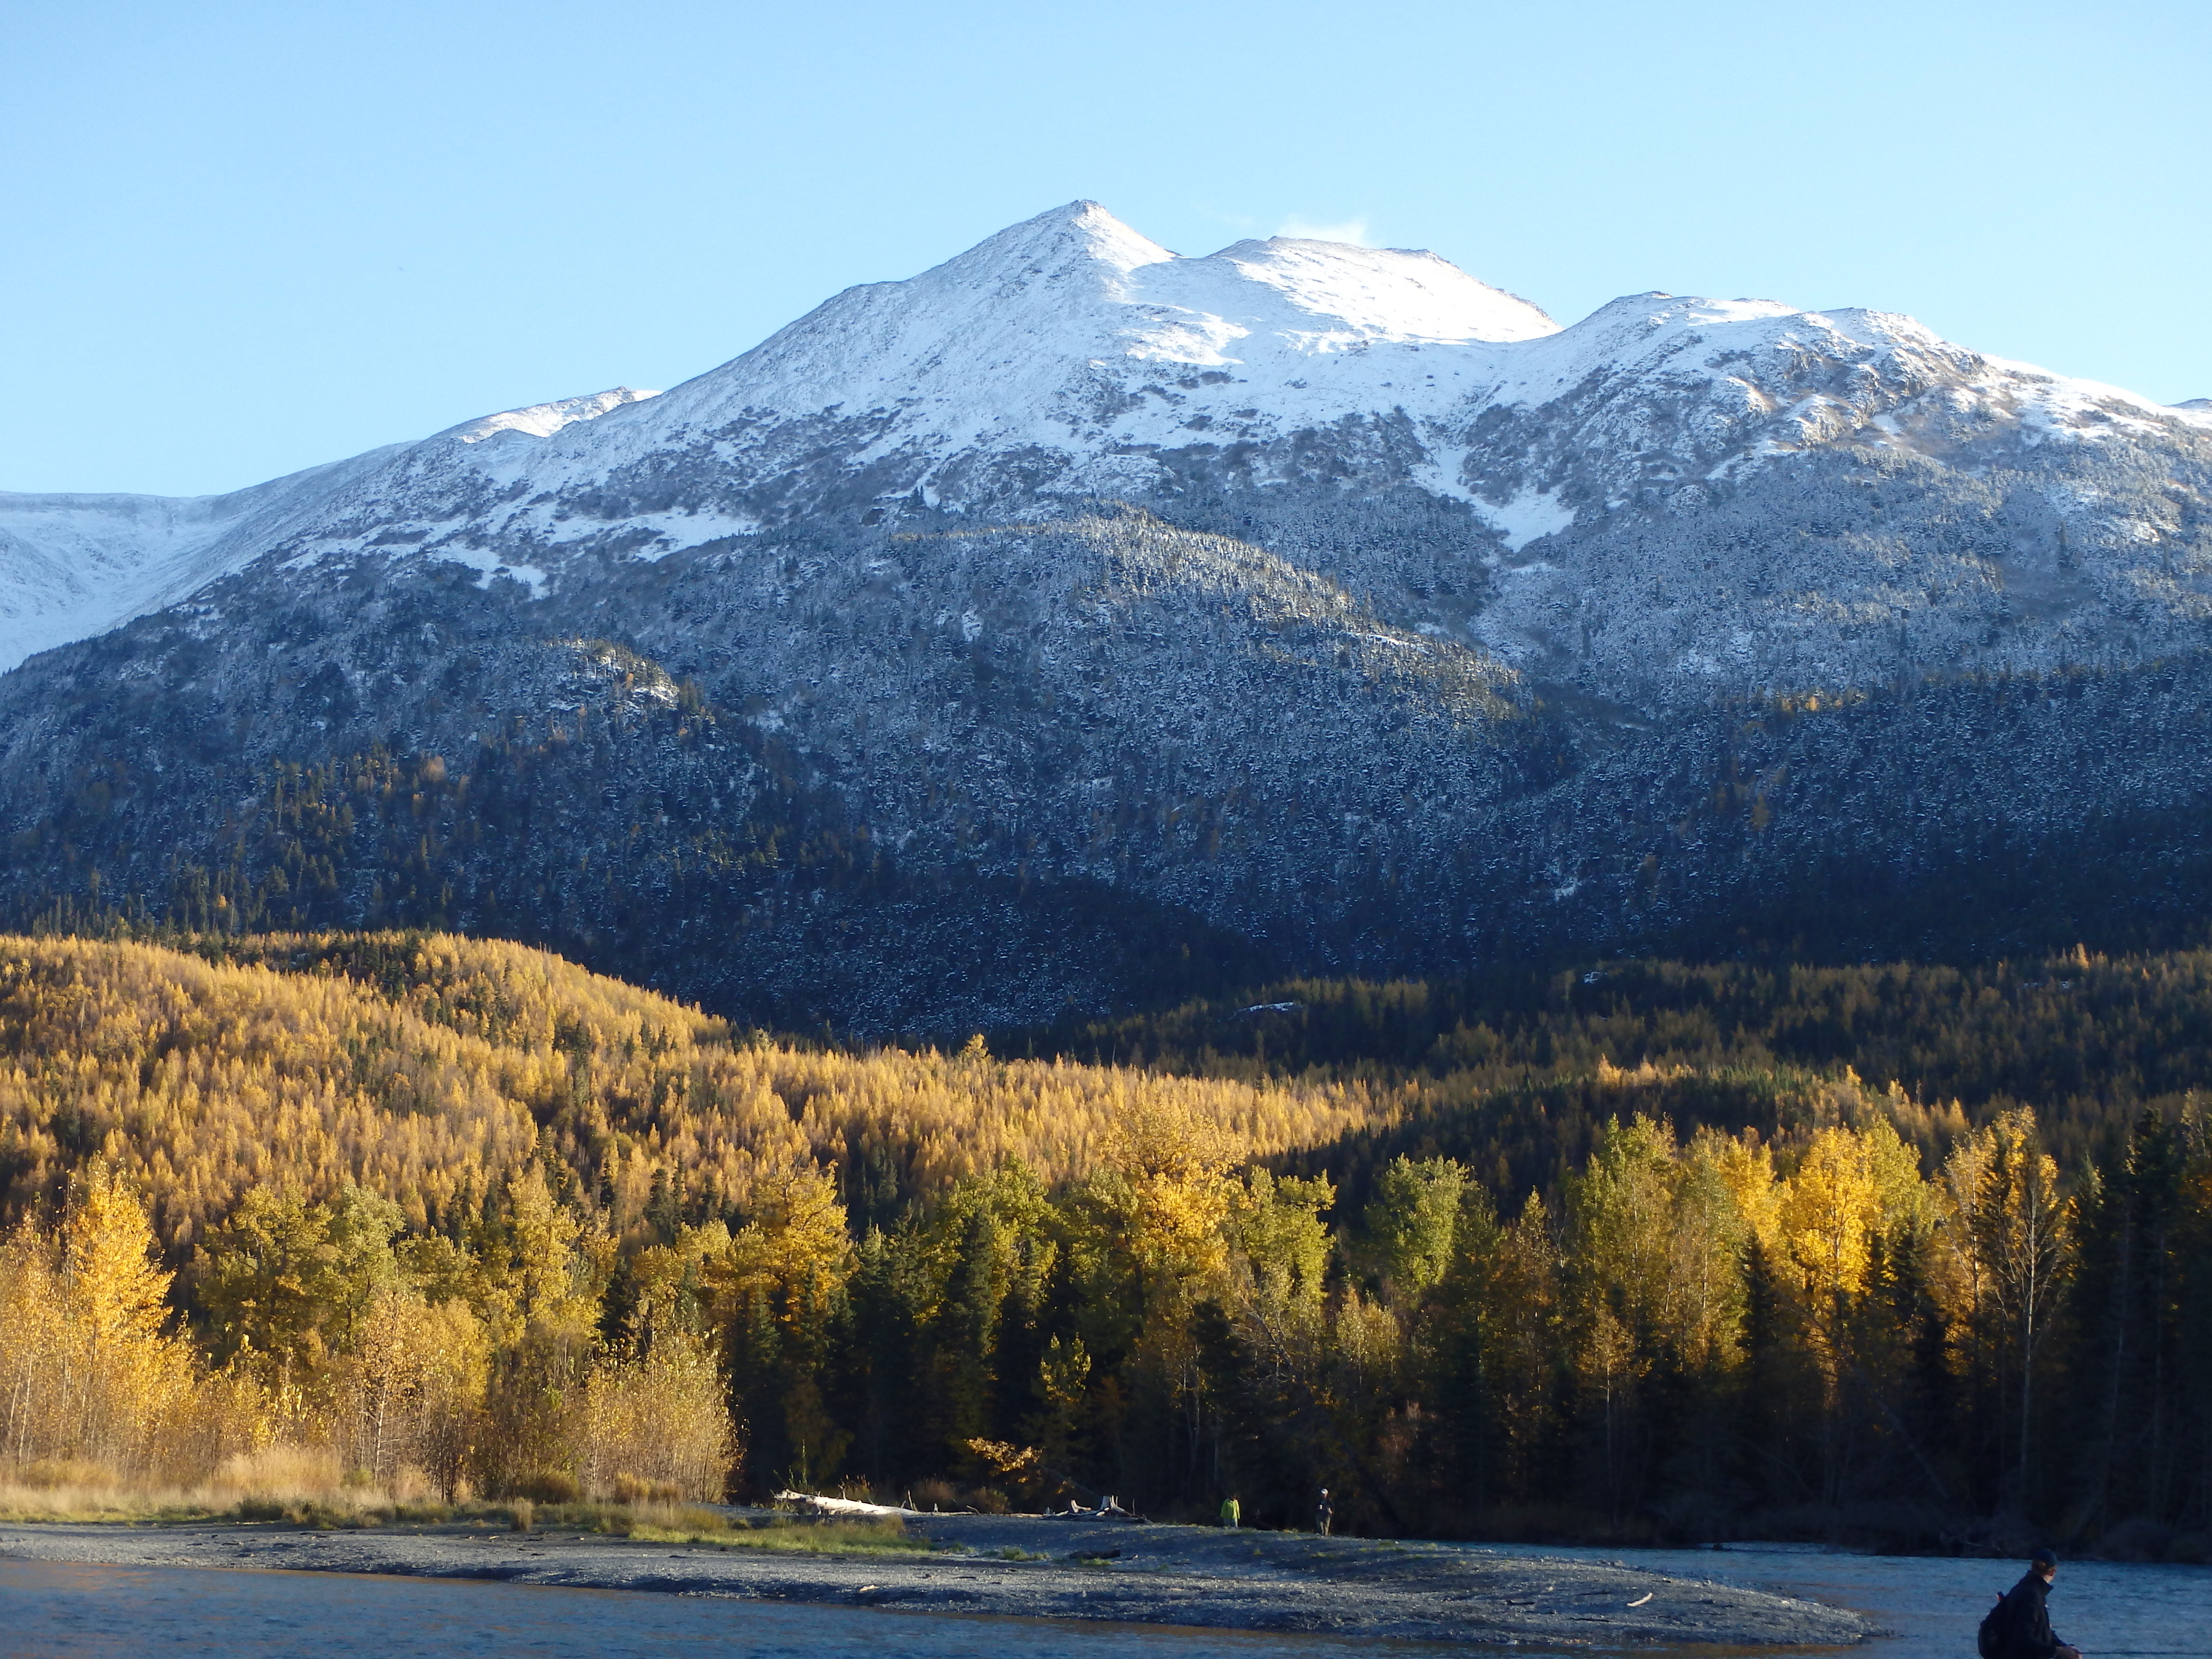 Alaska snowy peak and fall foliage view